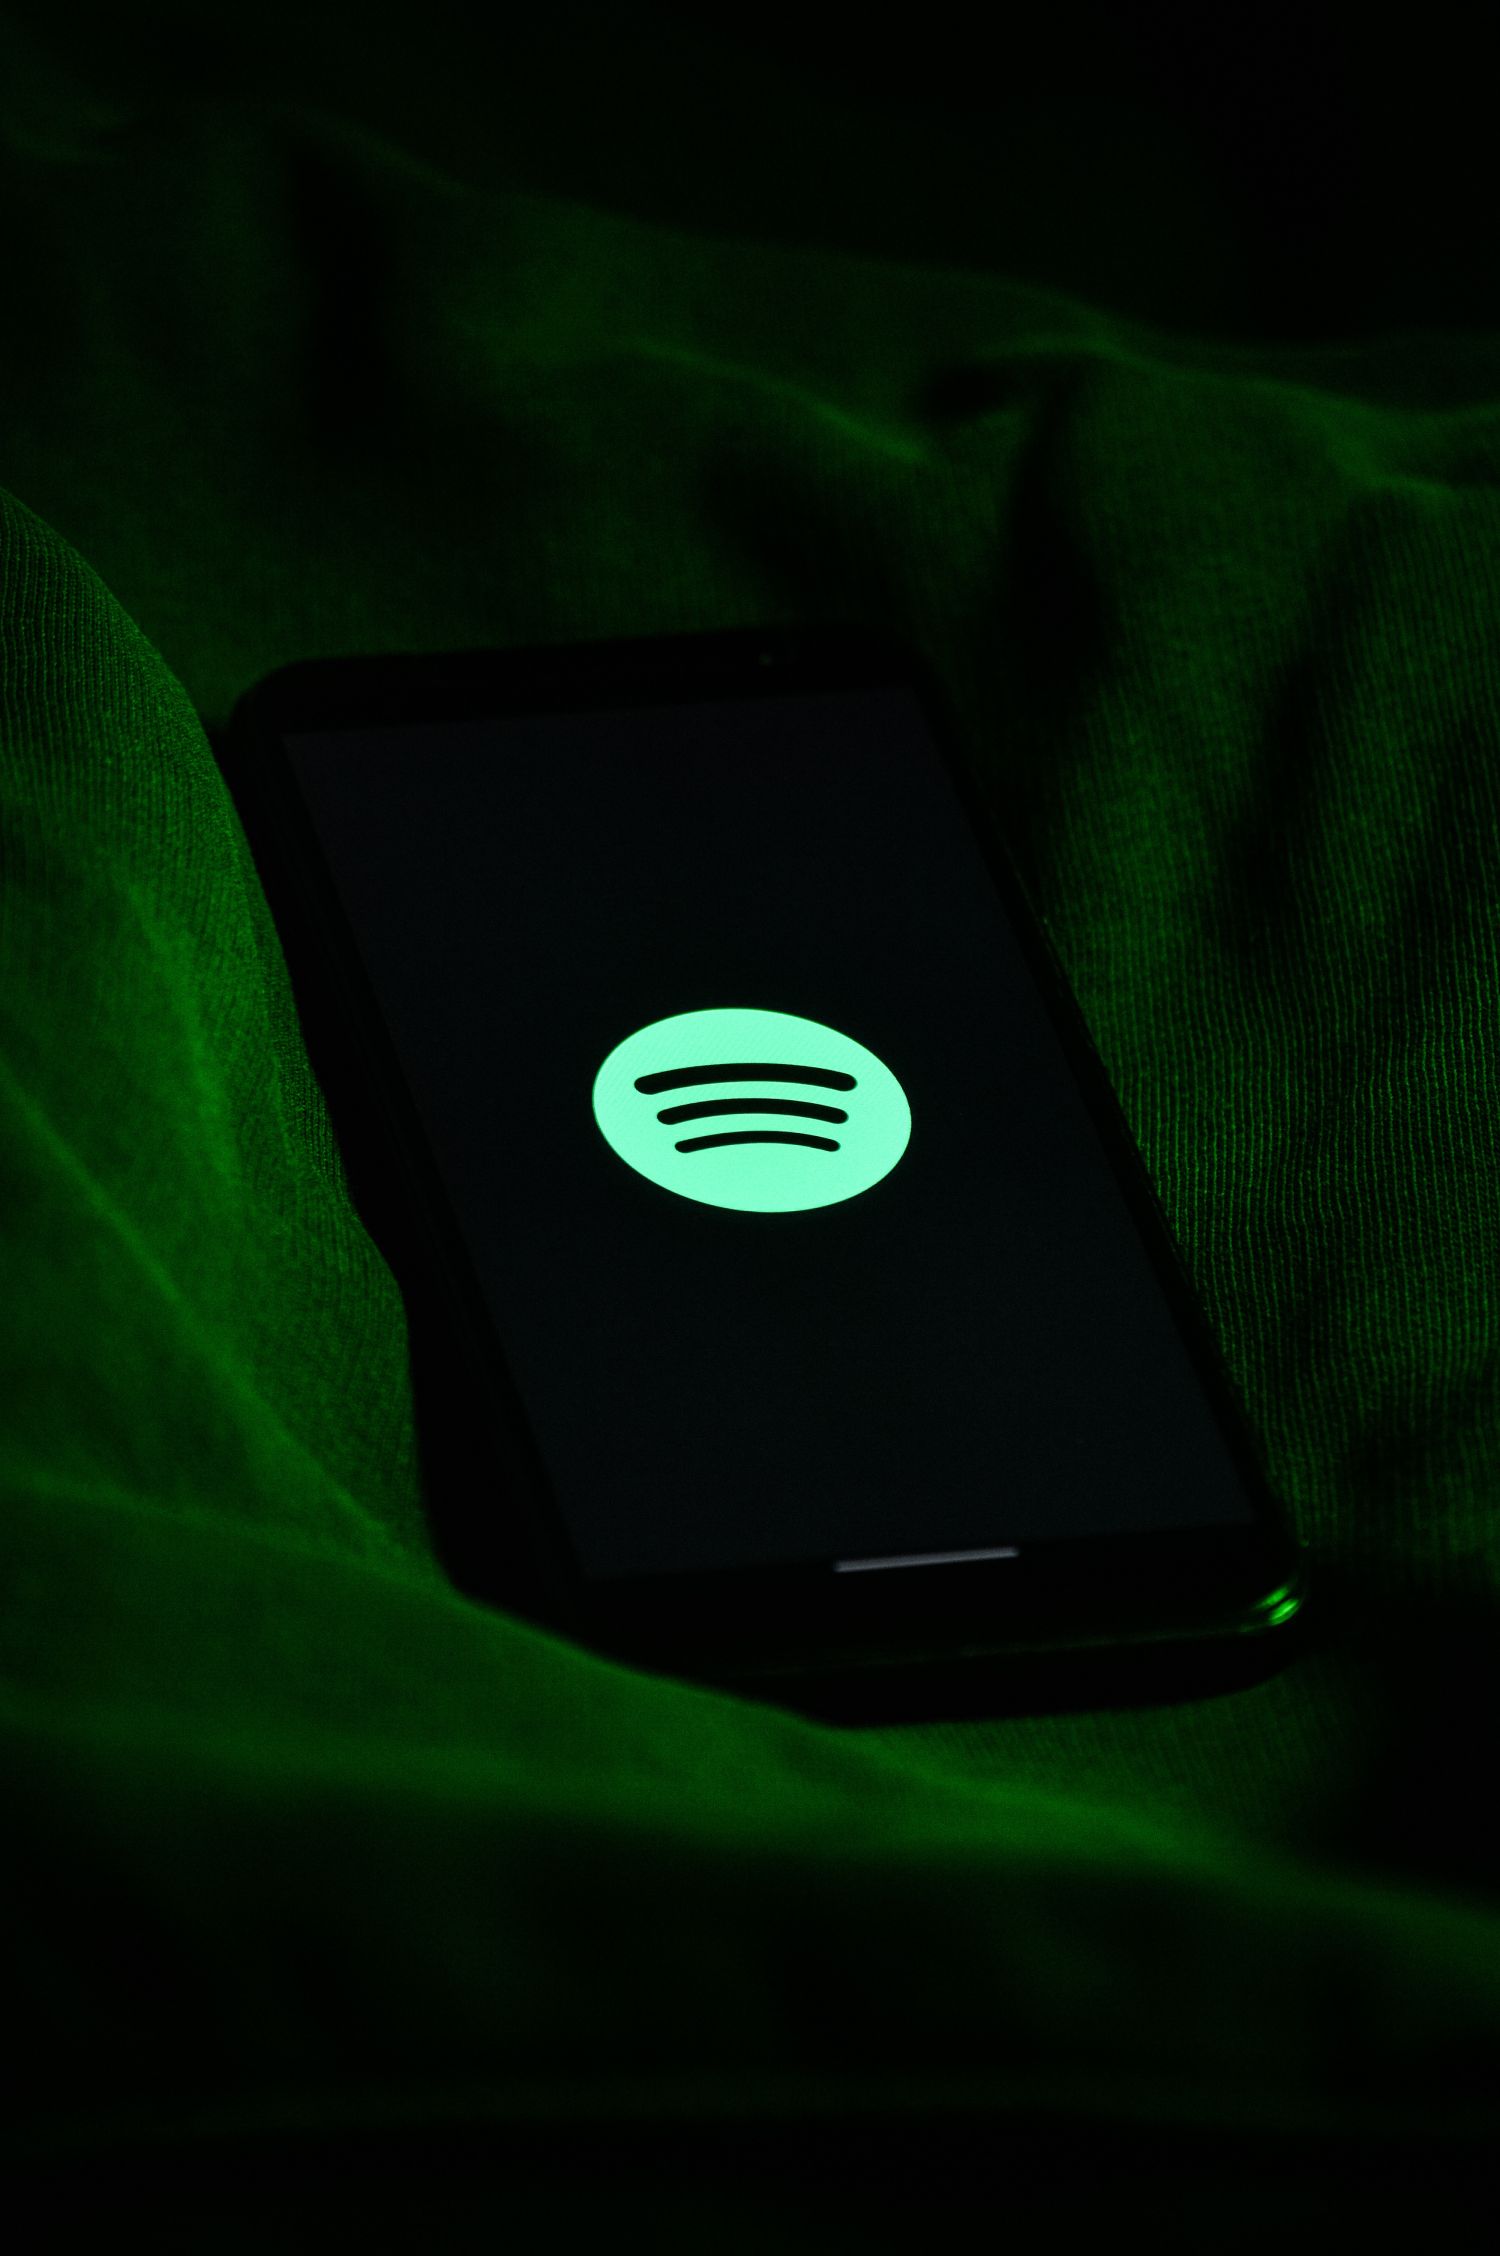 Spotify Premium Audiobooks